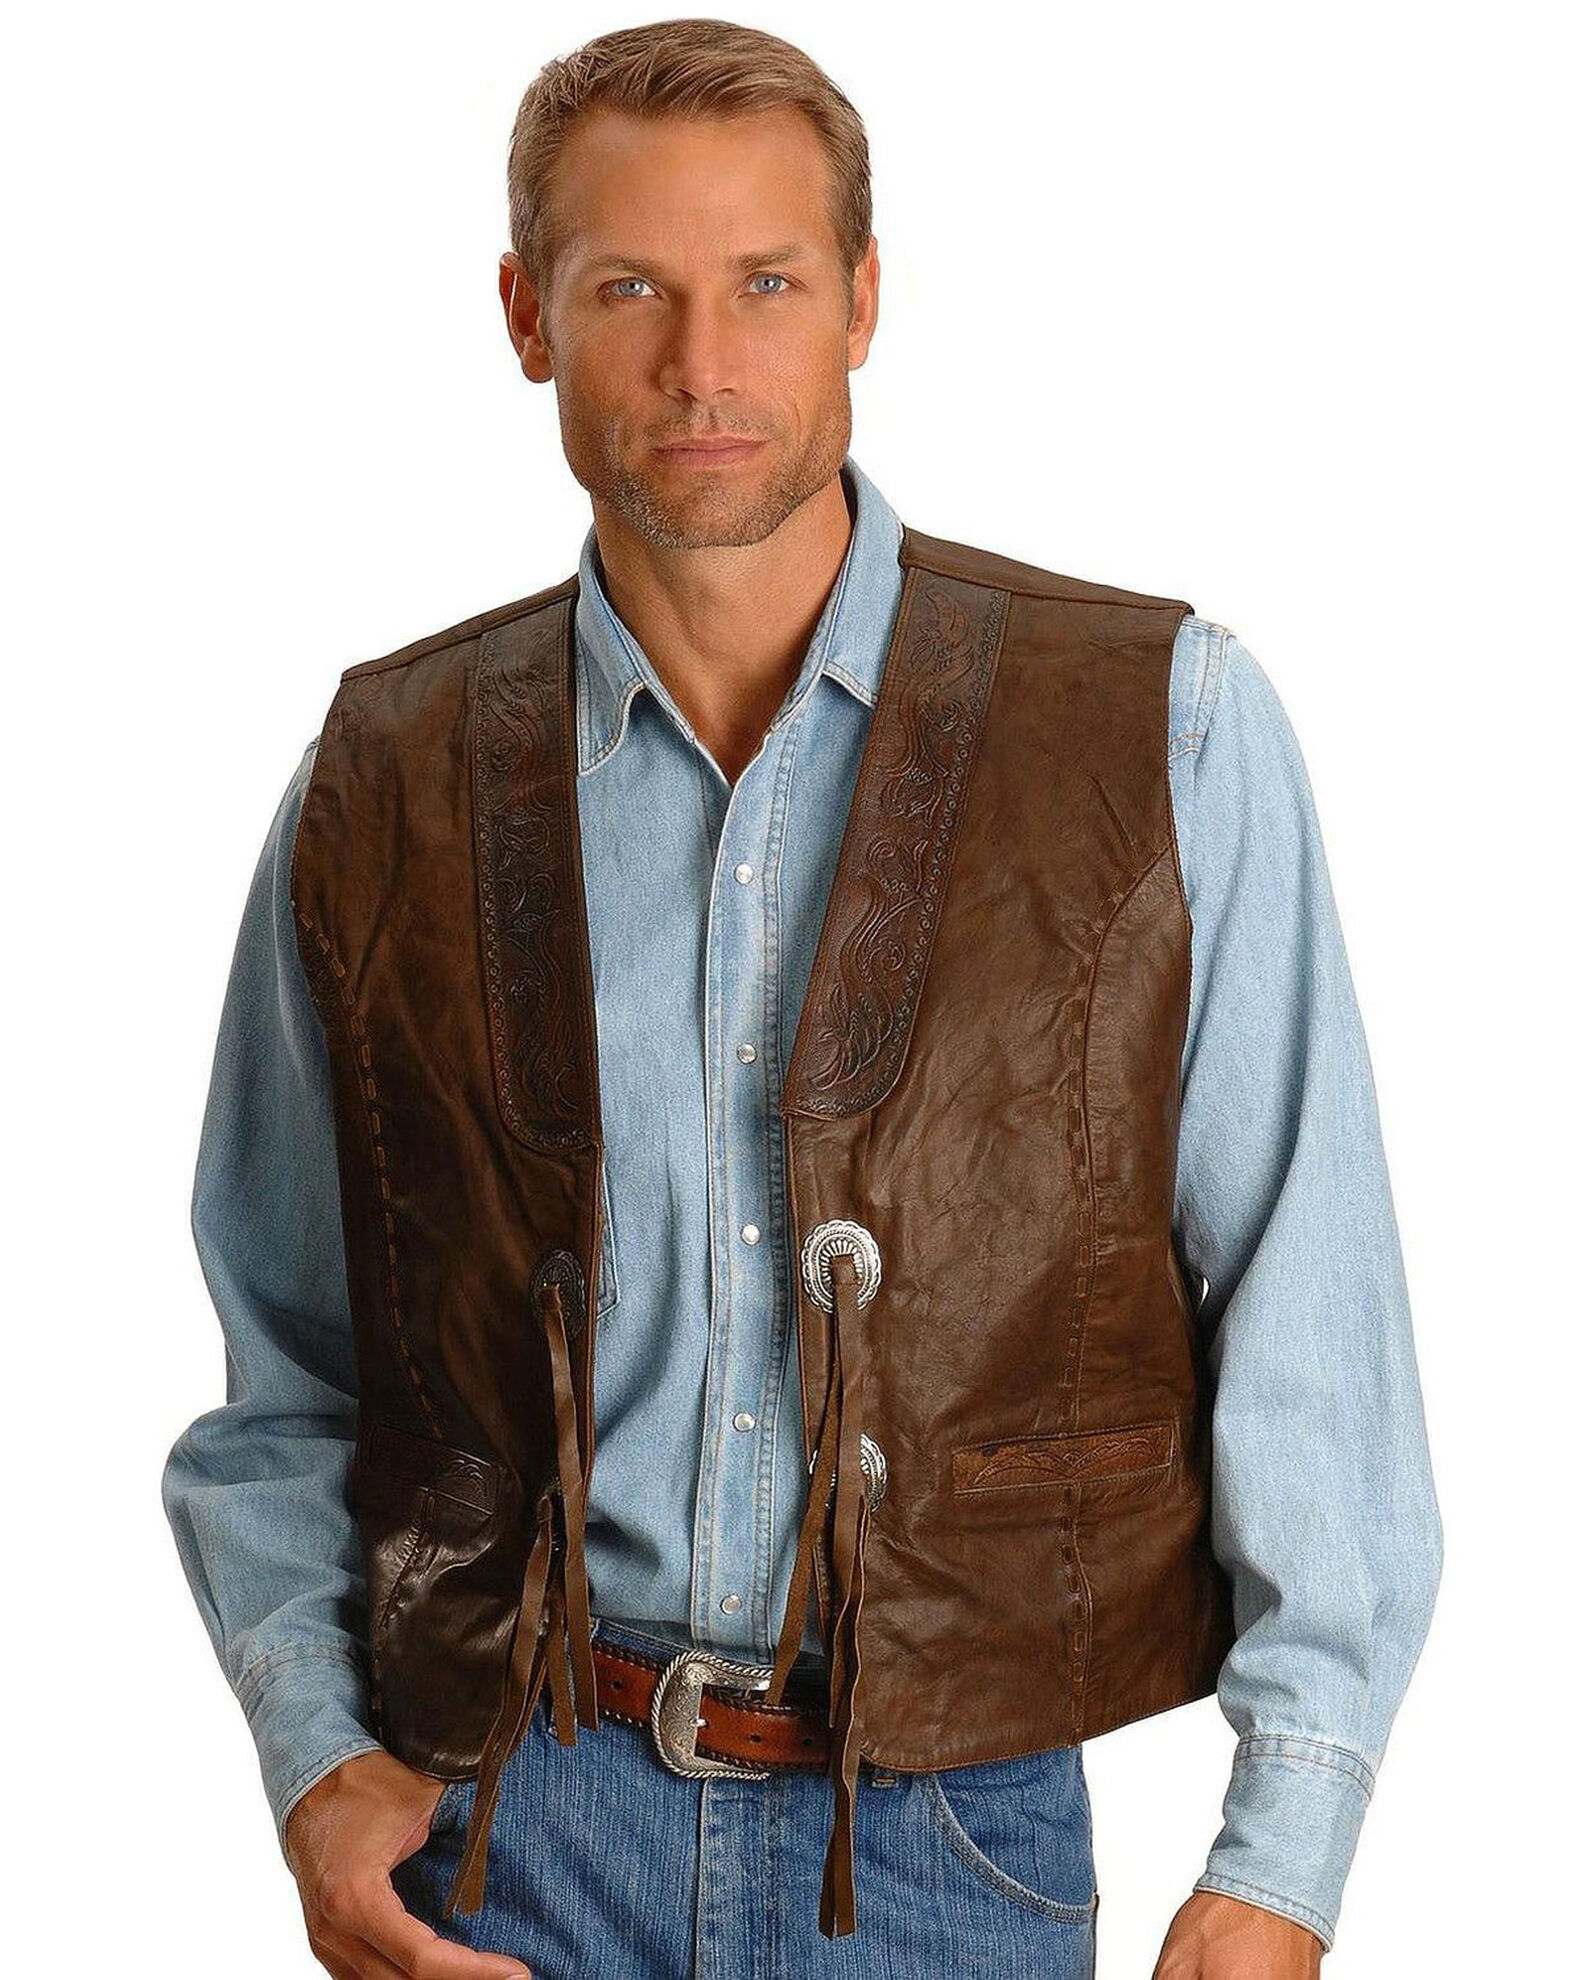 Product Name: Kobler Tooled Leather Vest